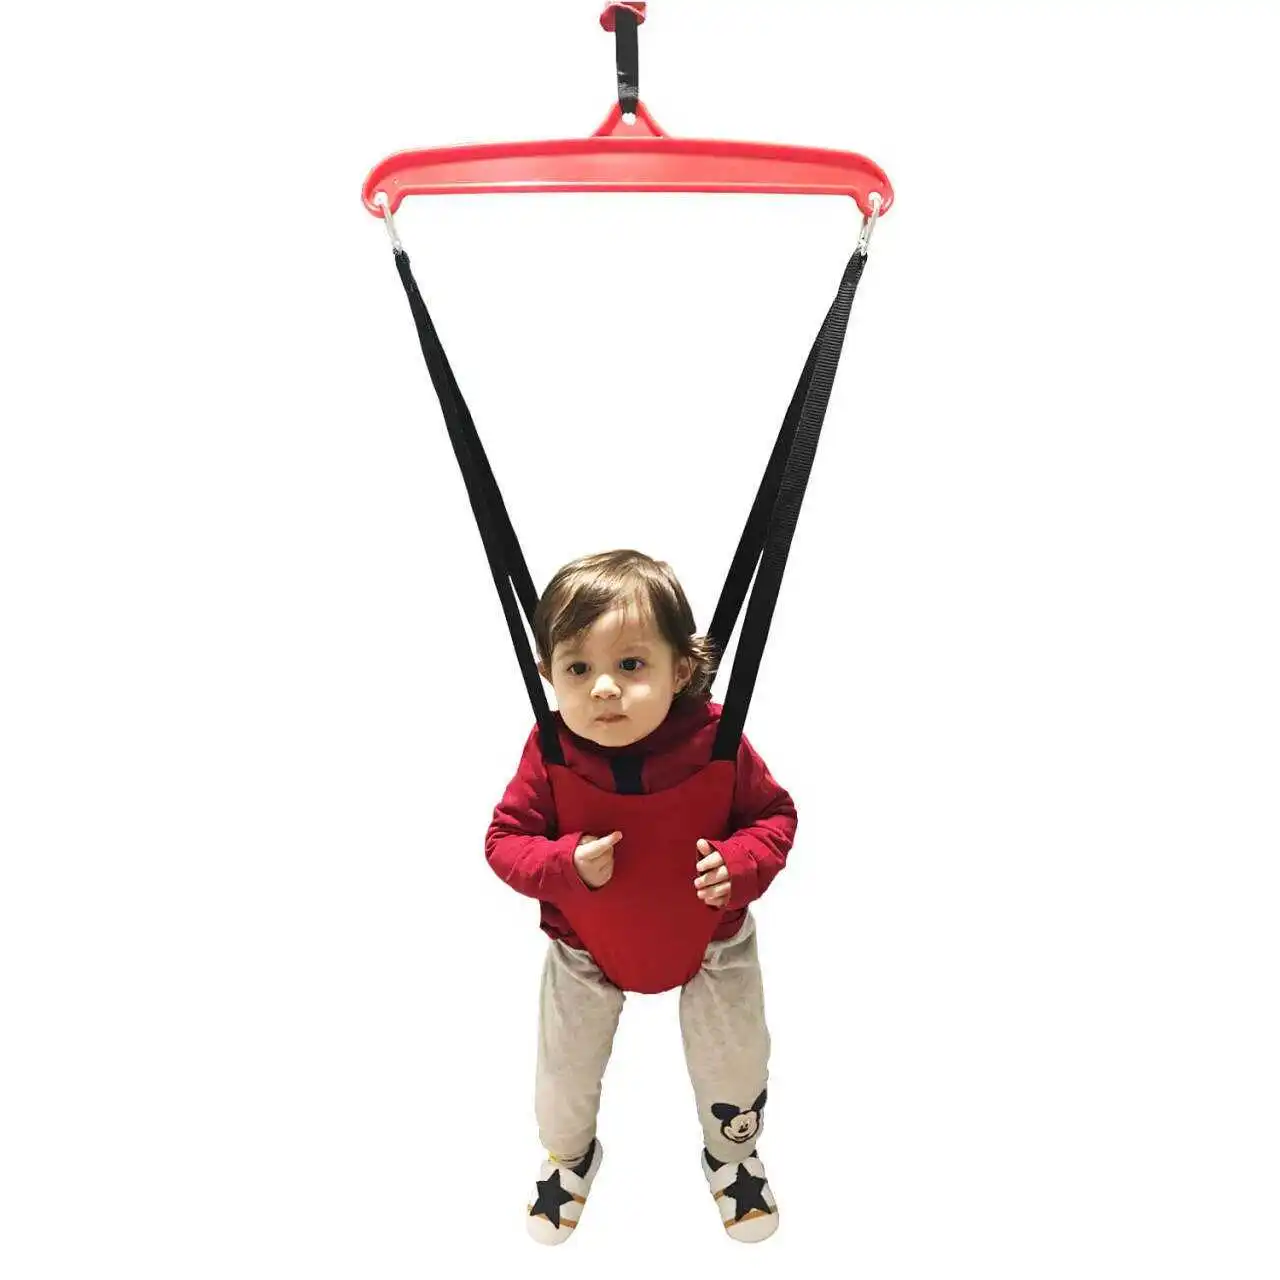 Svava Baby Bouncy Jumping Walker - Booster Kids Swing (Red) Baby Walker Baby Walking Accessory